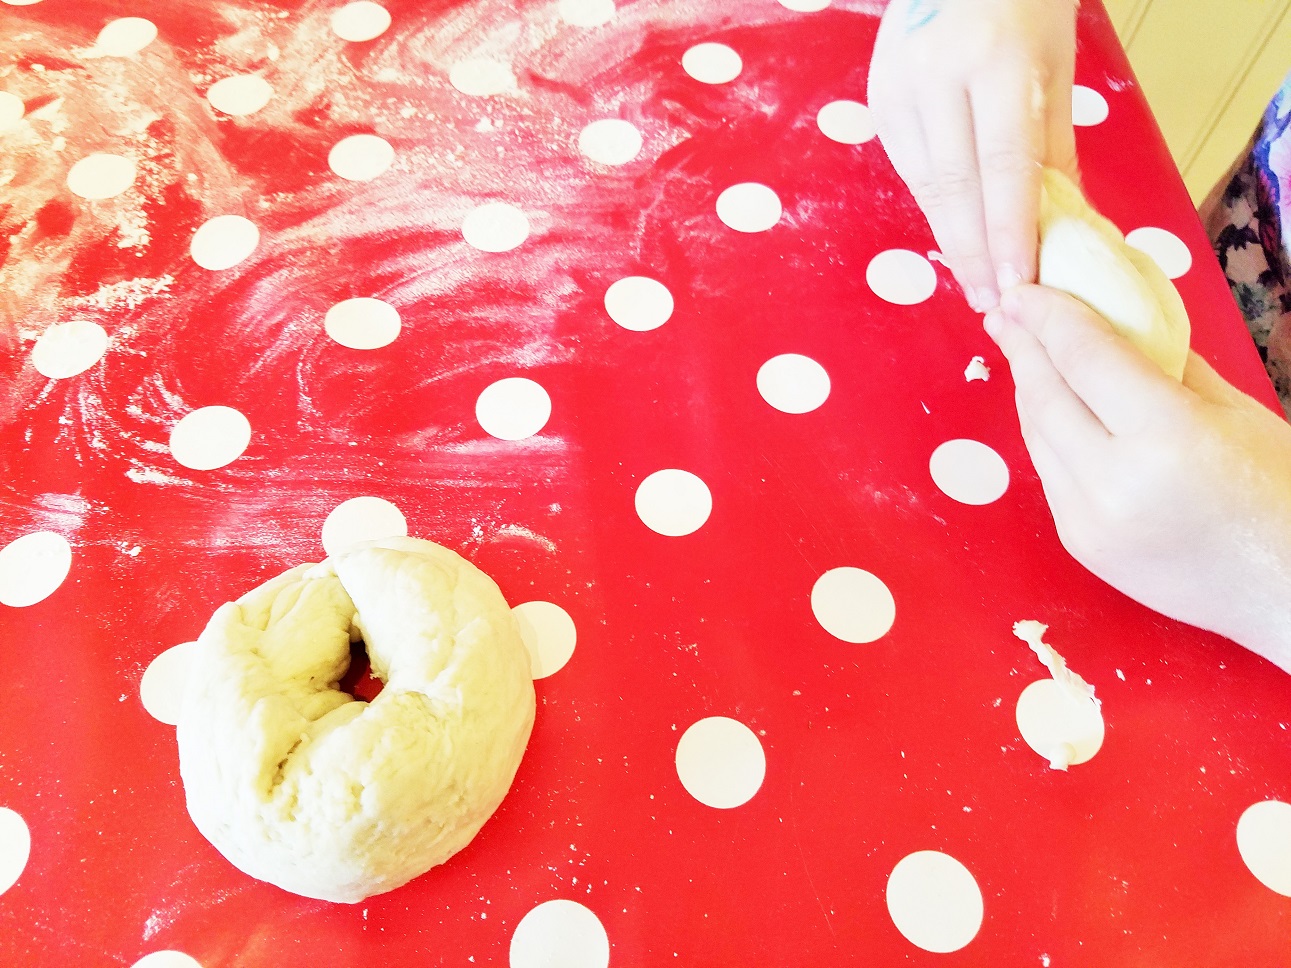 Bread maker baking - simple dough shapes - doughnut ring